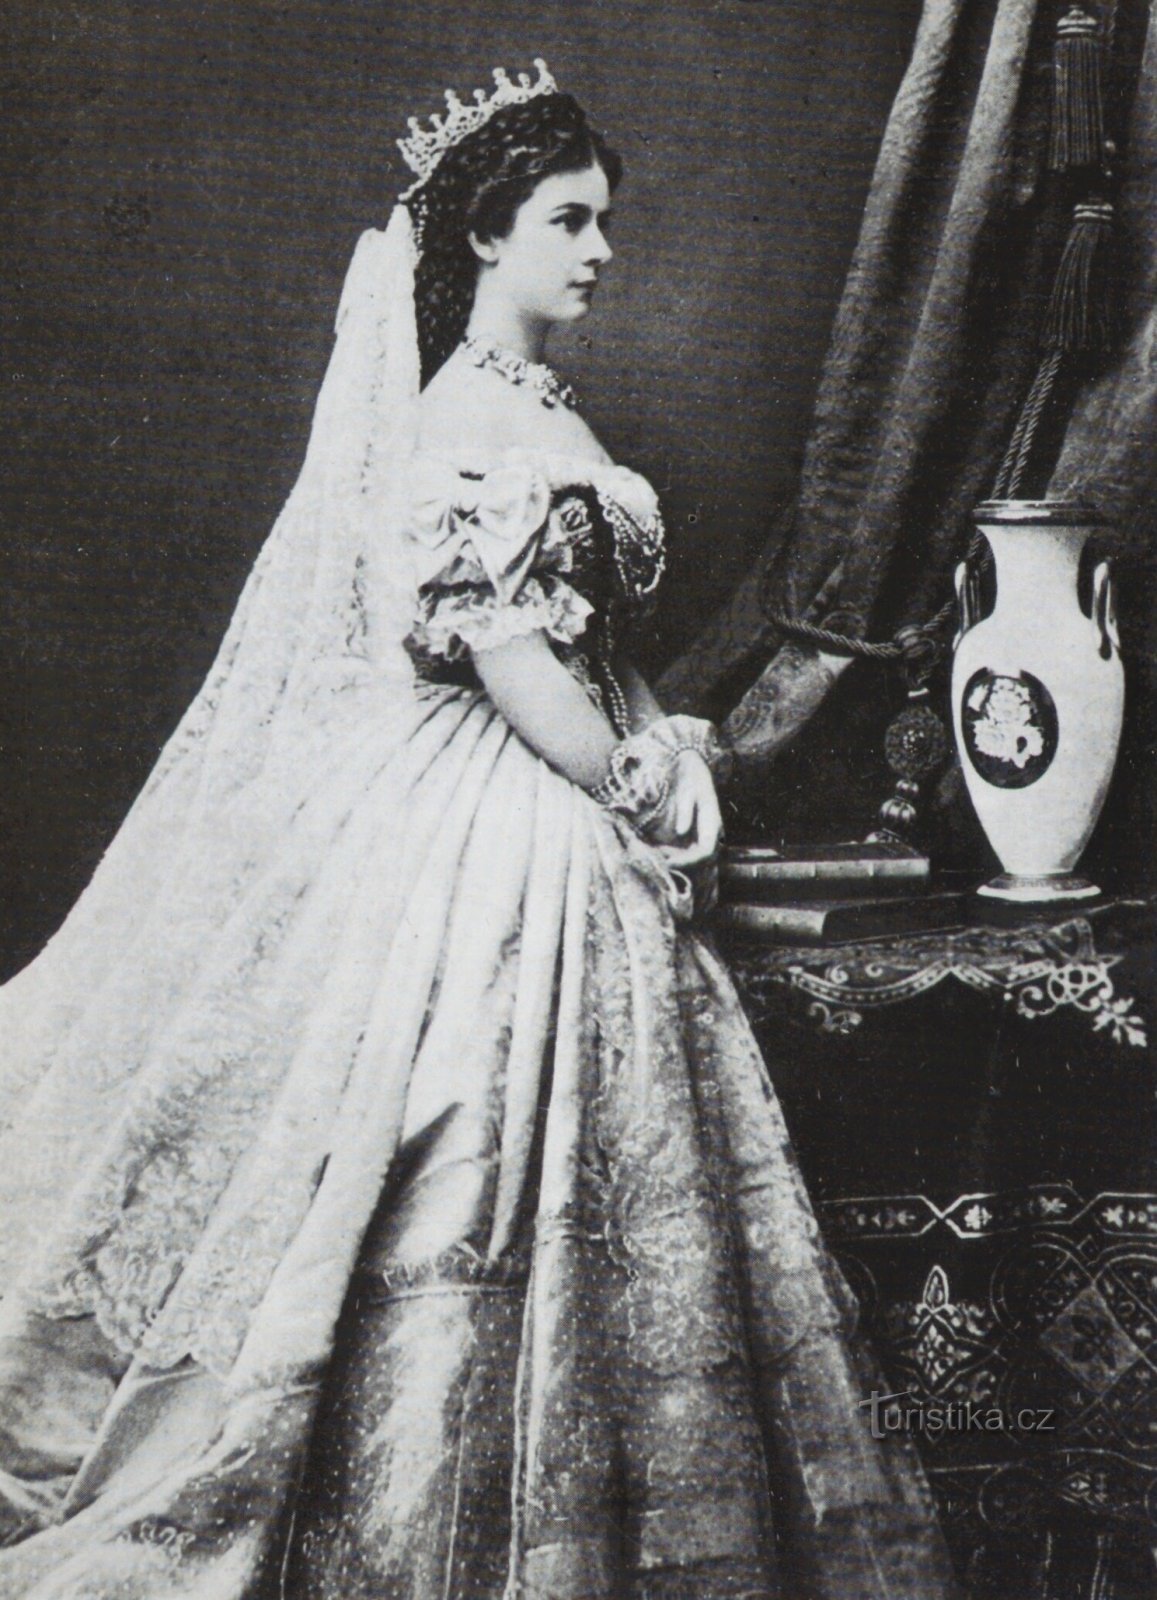 Carica Elizabeta Bavarska u mađarskoj krunidbenoj odori 1867